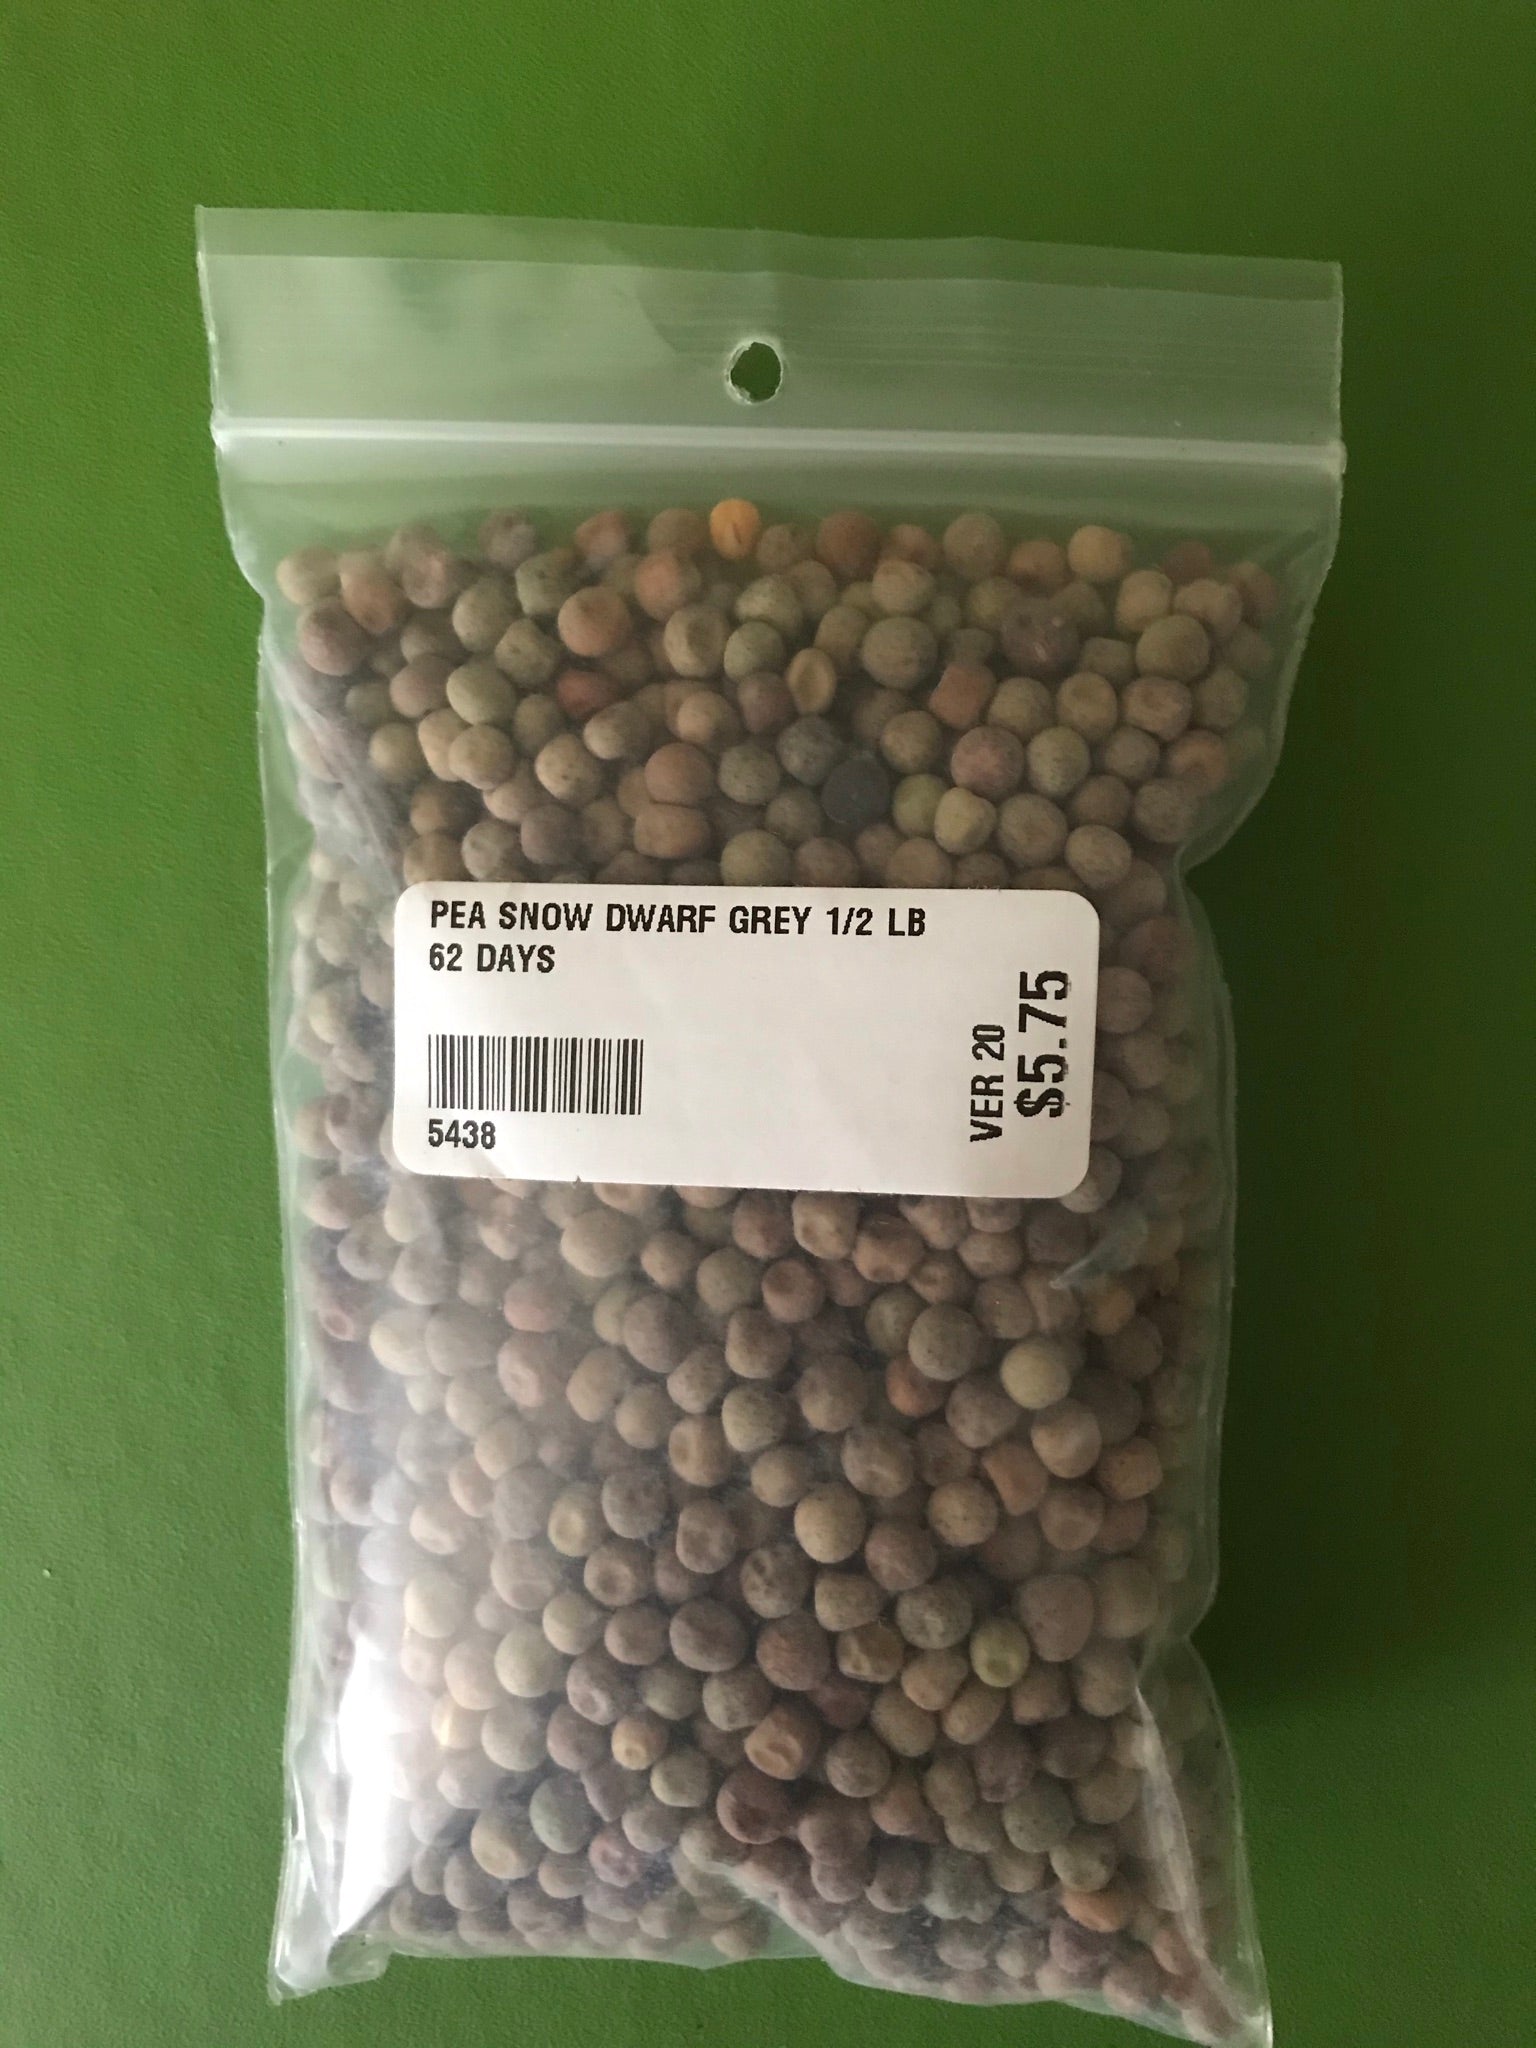 Dwarf Grey Sugar Edible Pod Pea Seeds (62 Days) - 1/2 lb - Bulk